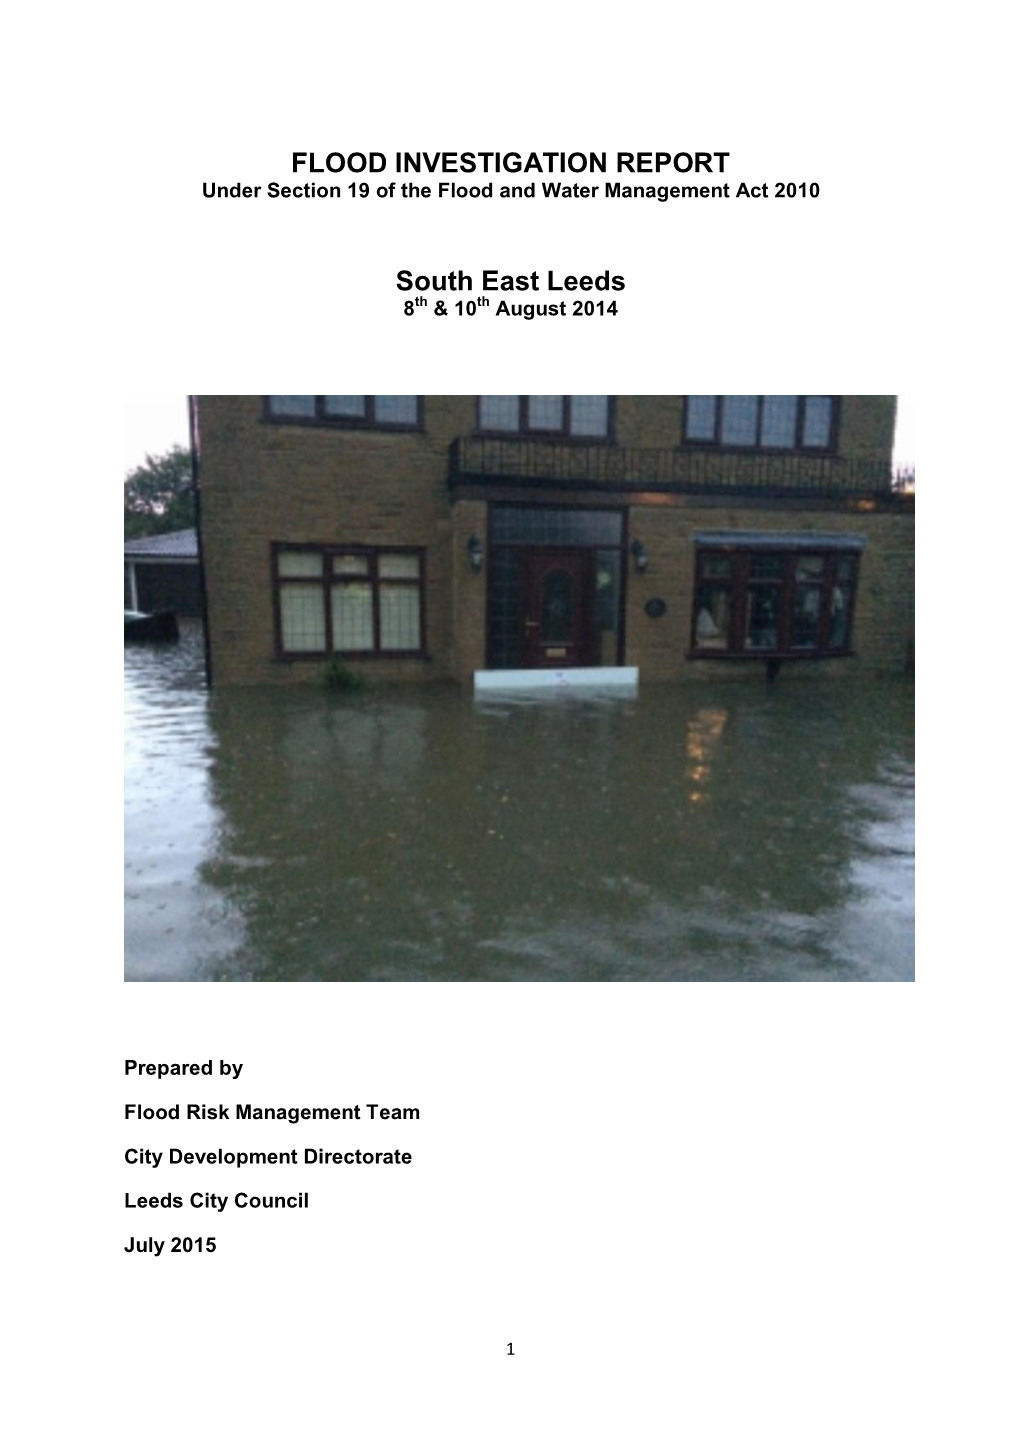 FLOOD INVESTIGATION REPORT South East Leeds